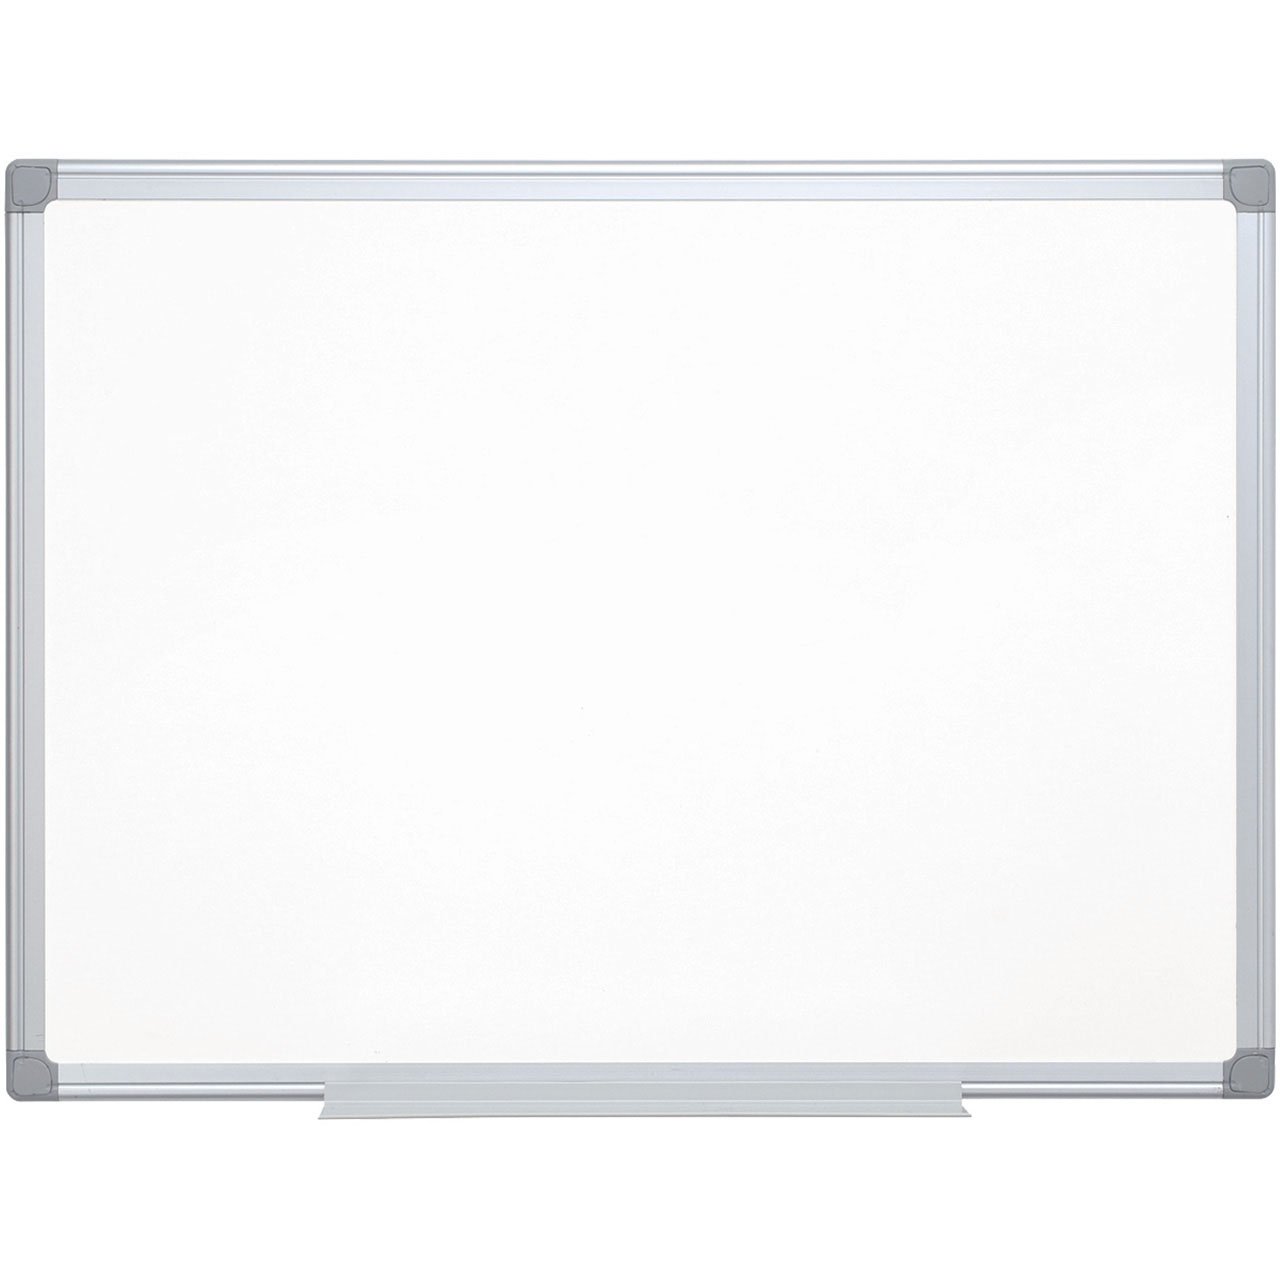 Q-connect lakeret whiteboardtavle 450 mm x 600 mm, Stål/Aluminium